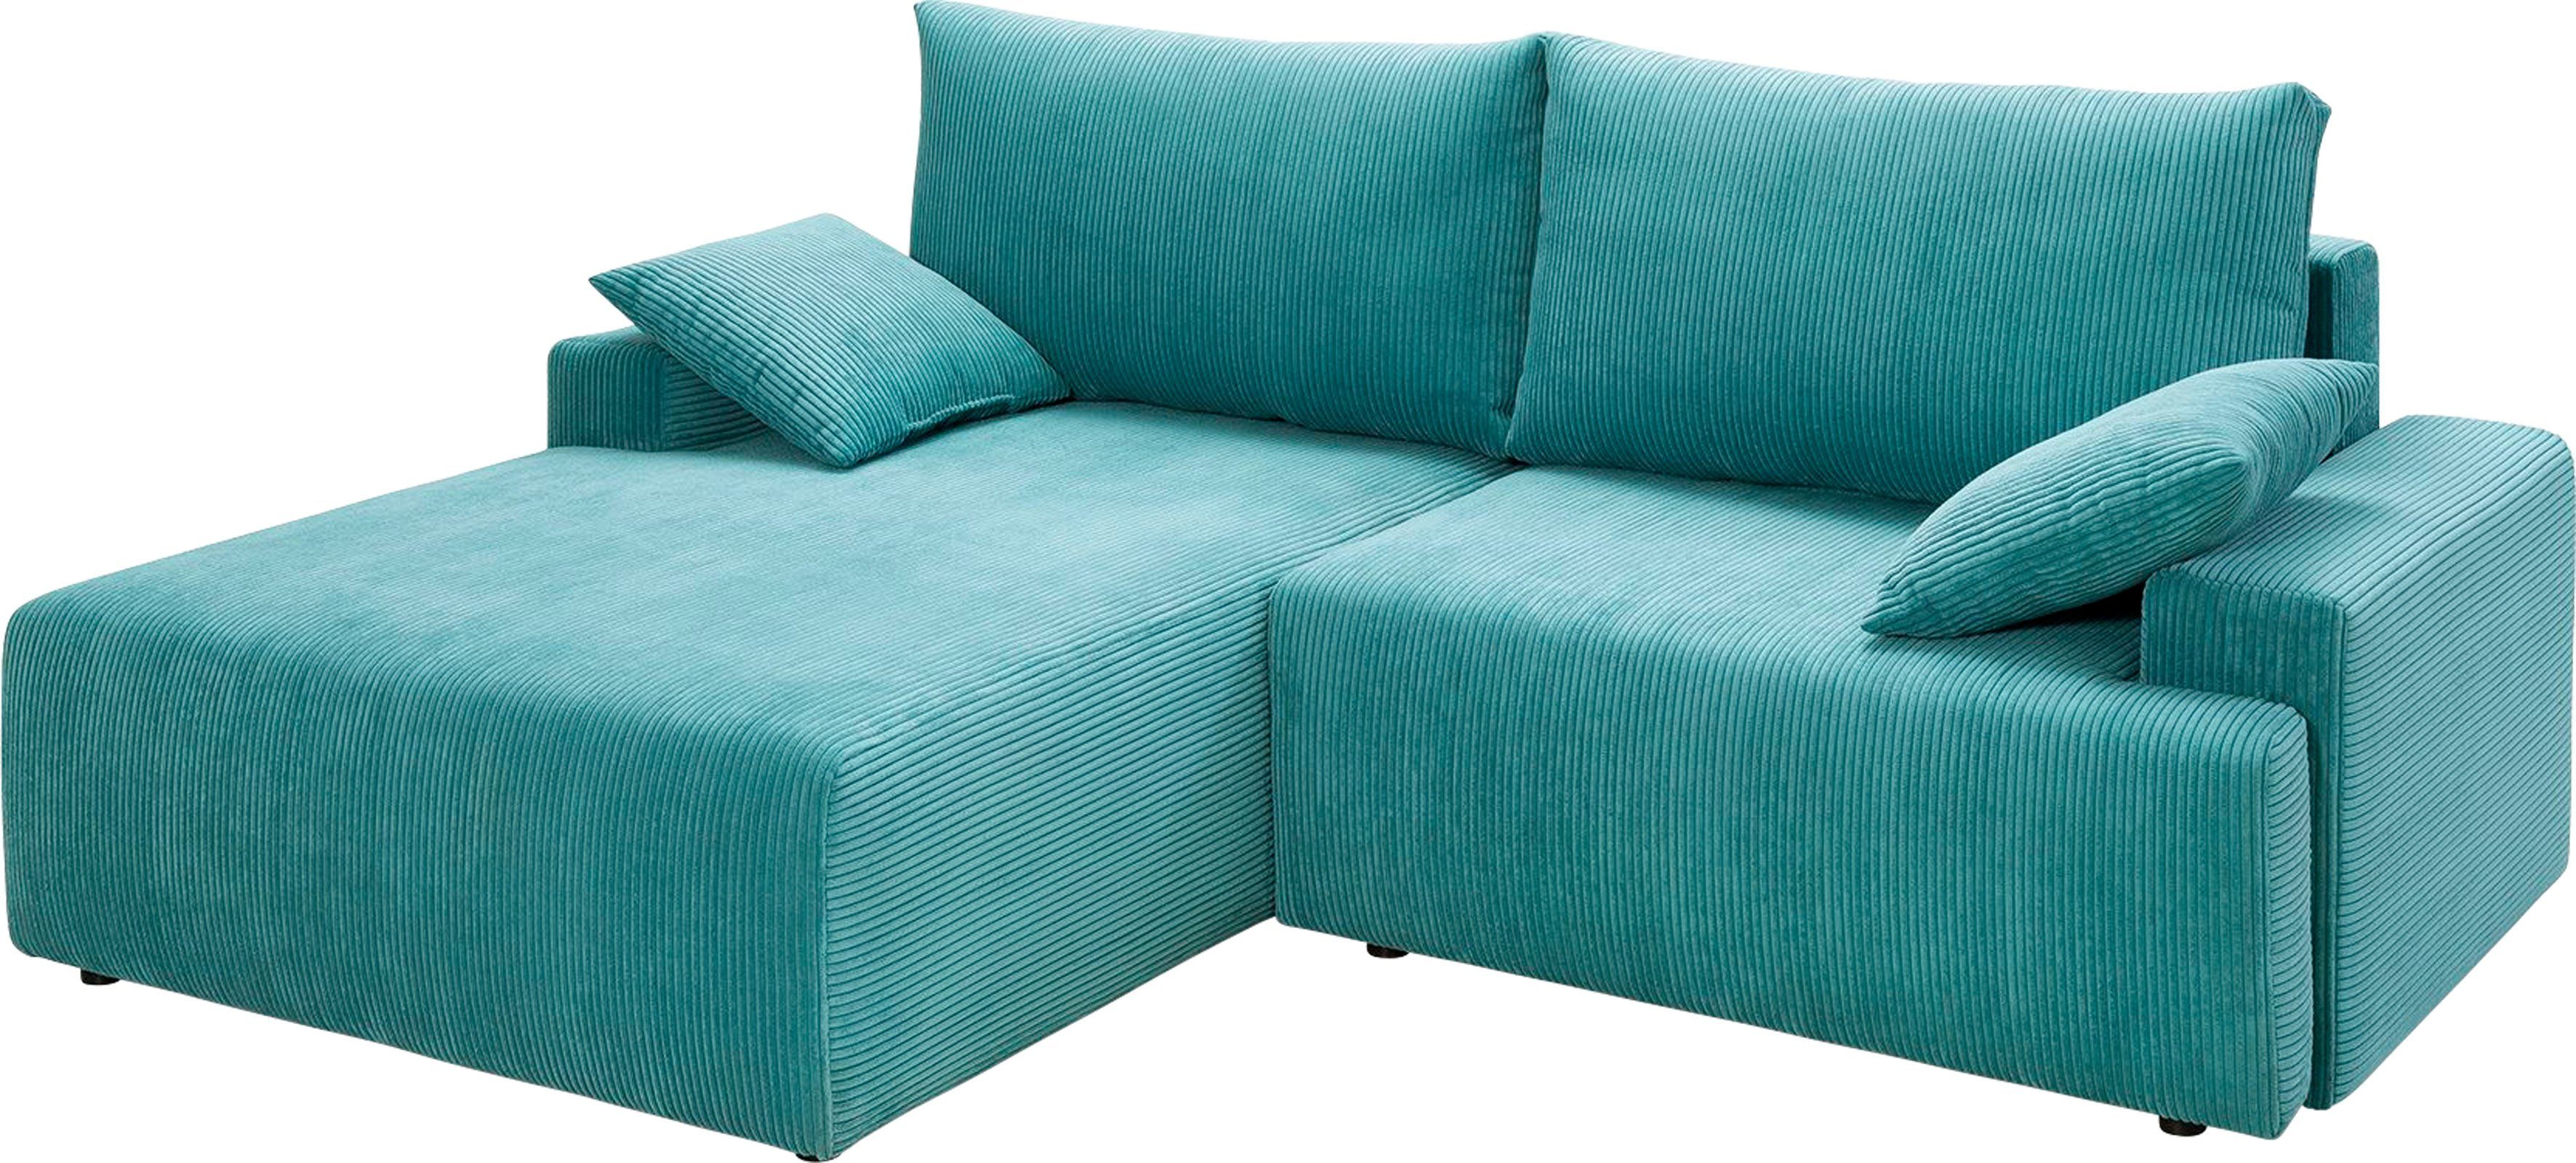 Cord-Farben in - Ecksofa exxpo fashion Orinoko, Bettkasten sky Bettfunktion und inklusive sofa verschiedenen